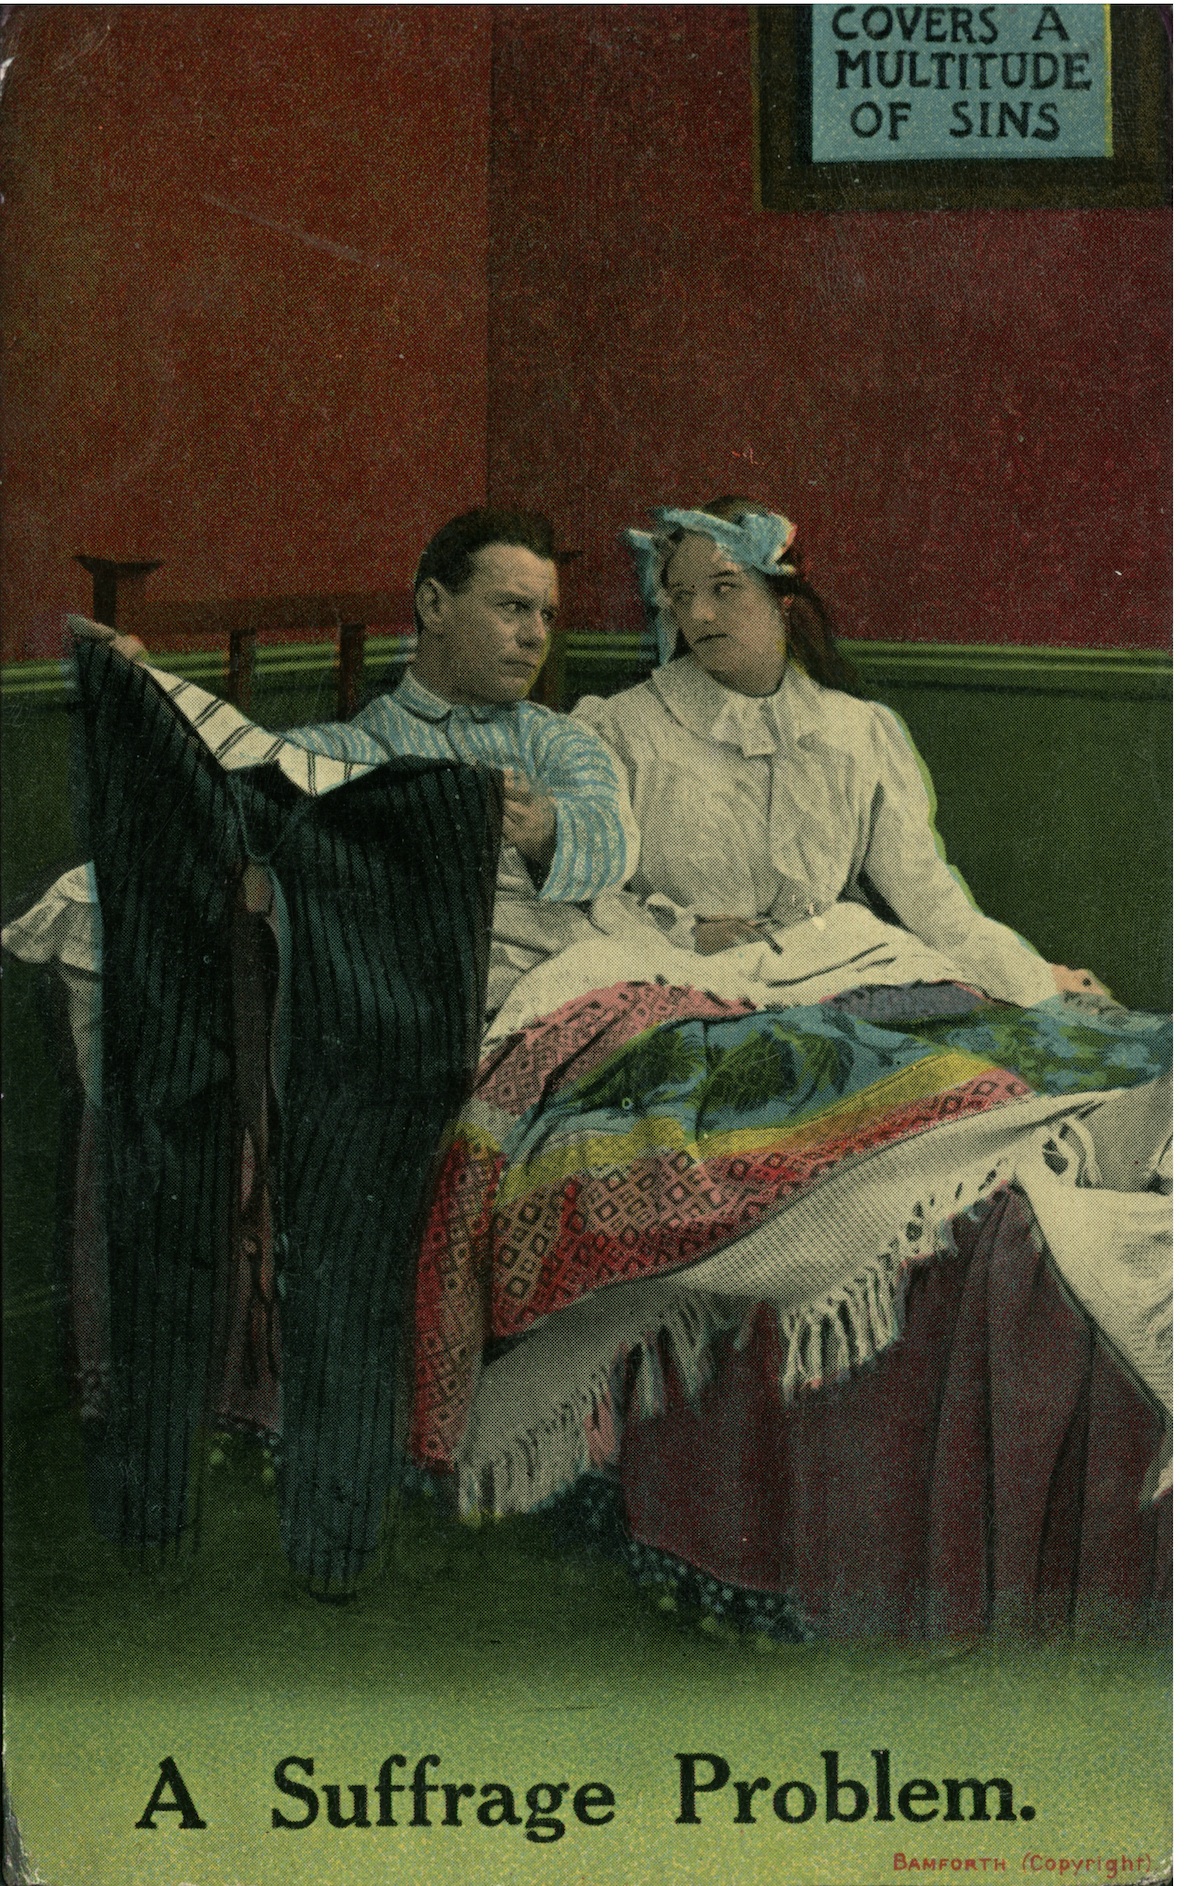 suffragettepostcardsuffaragevoteswomen